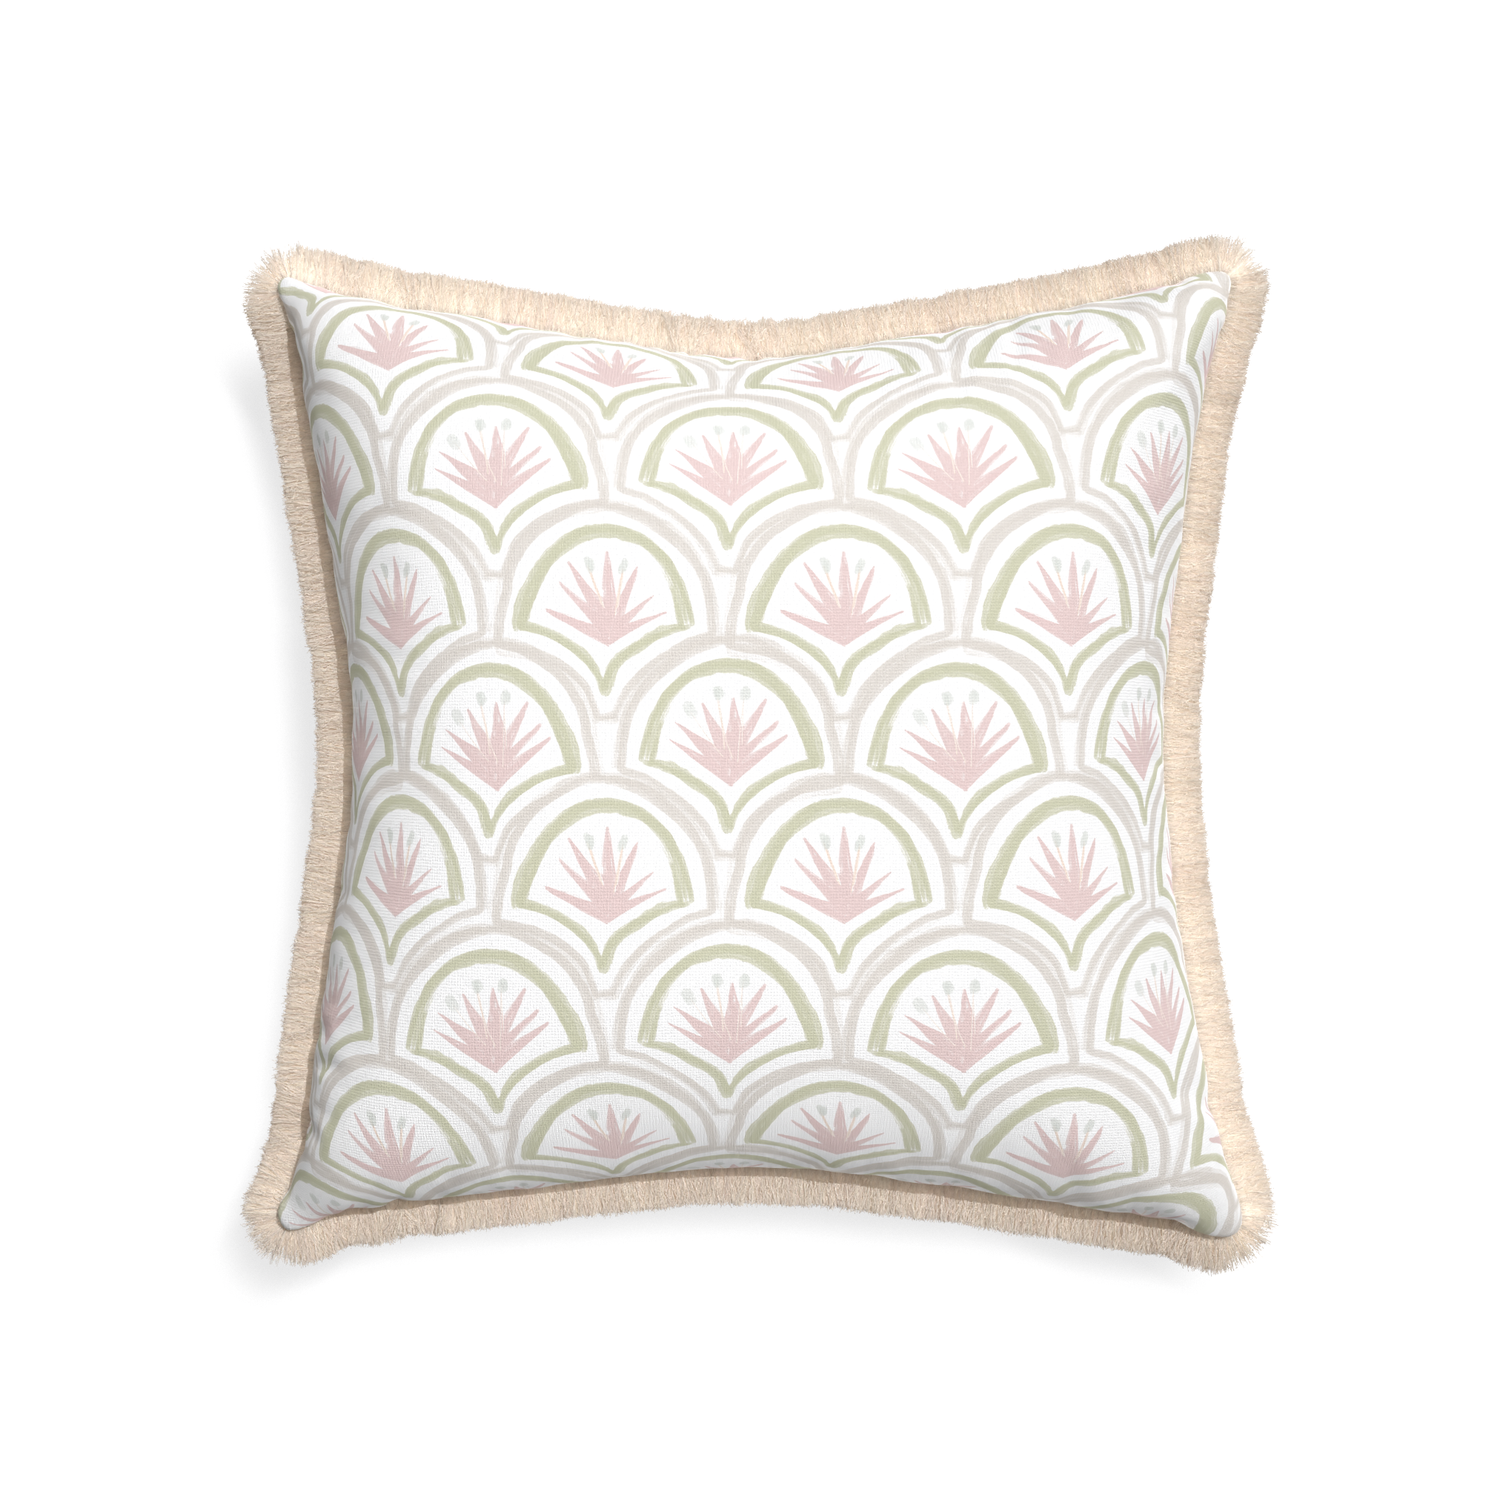 22-square thatcher rose custom pillow with cream fringe on white background